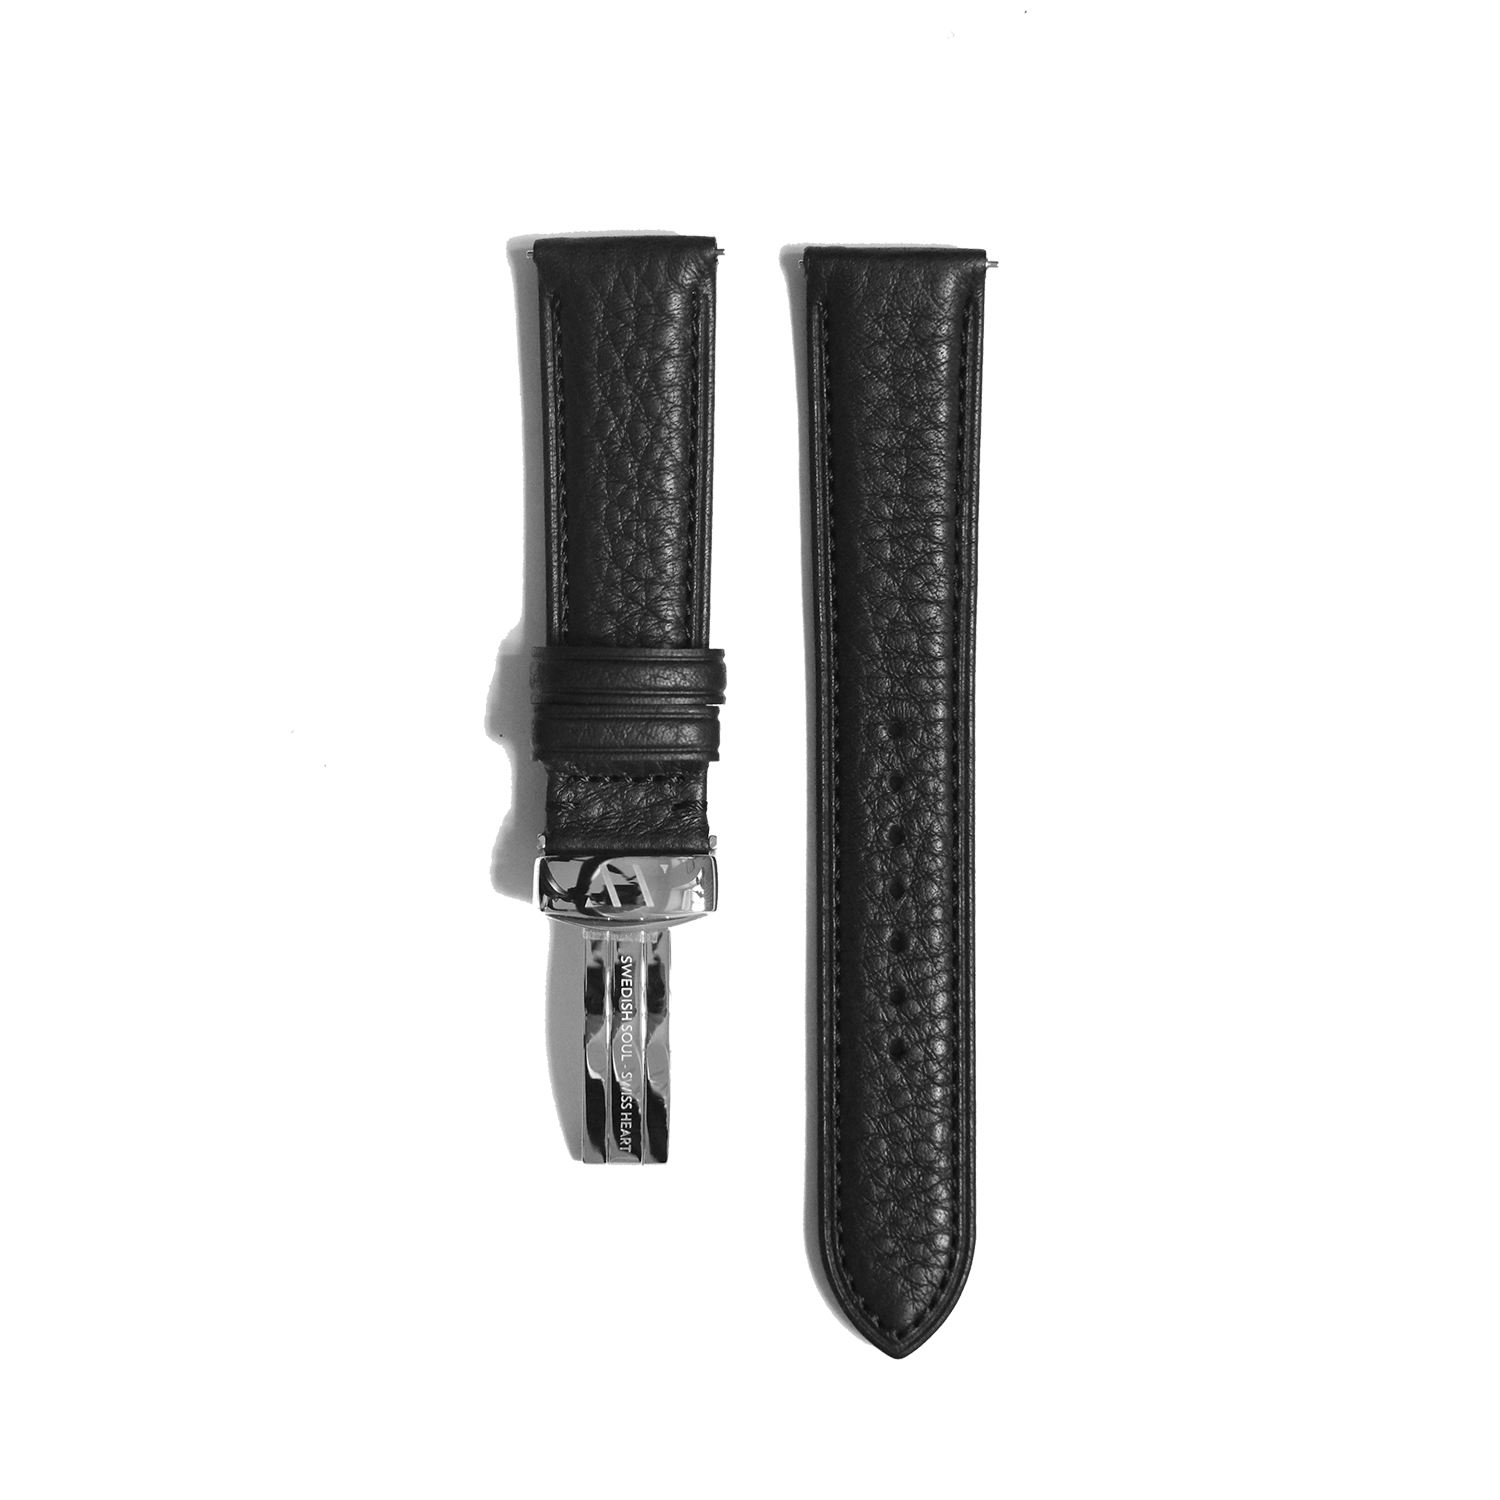 Black leather strap with edge seam